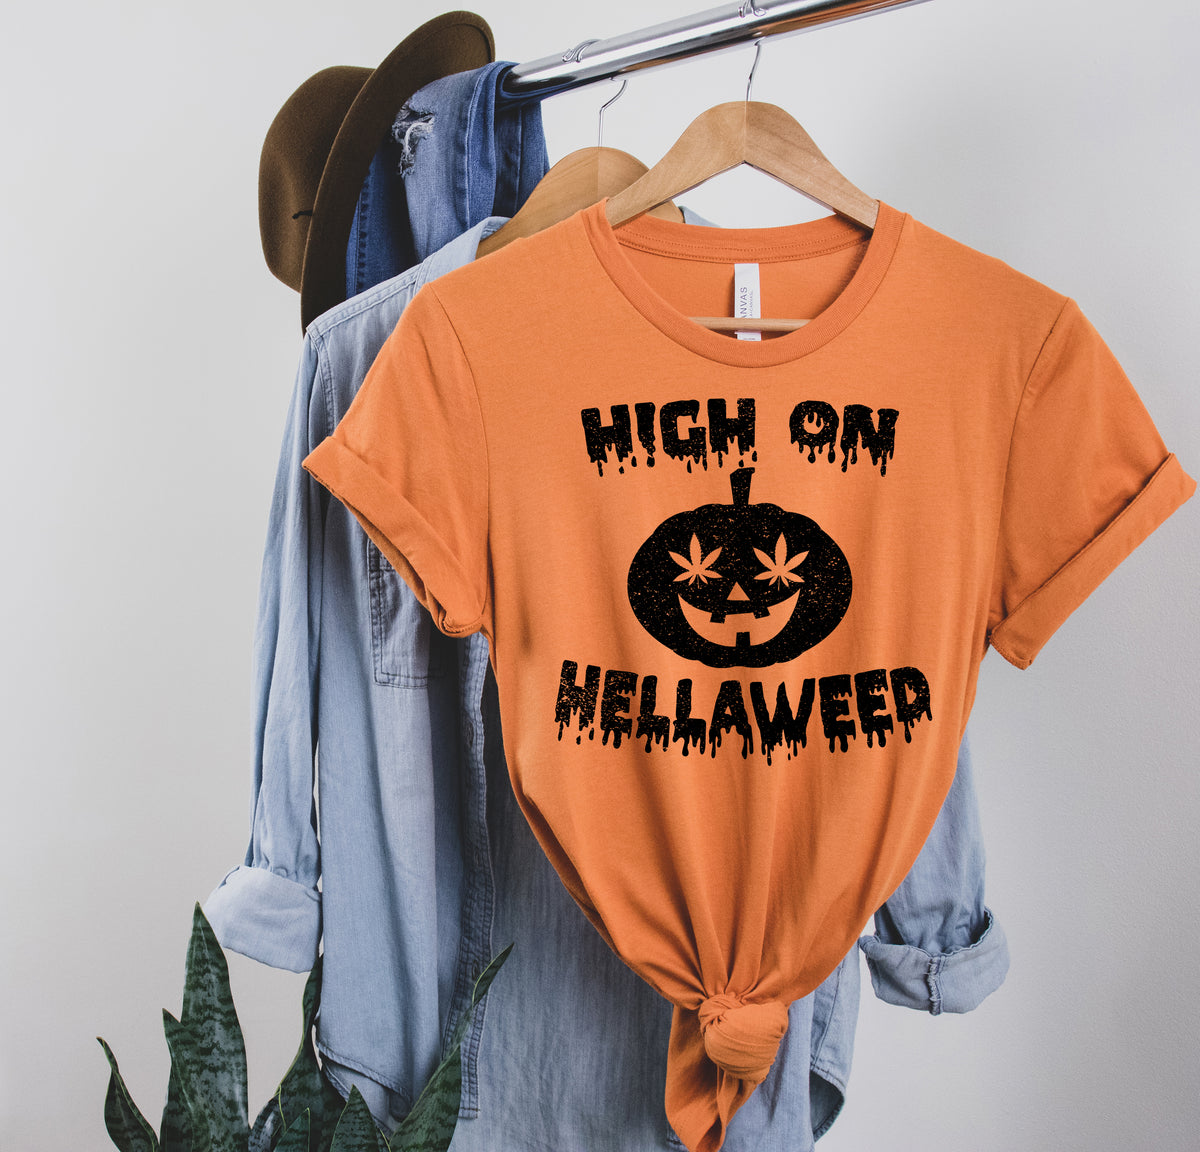 stoner halloween shirt that says high on hellaweed - HighCiti